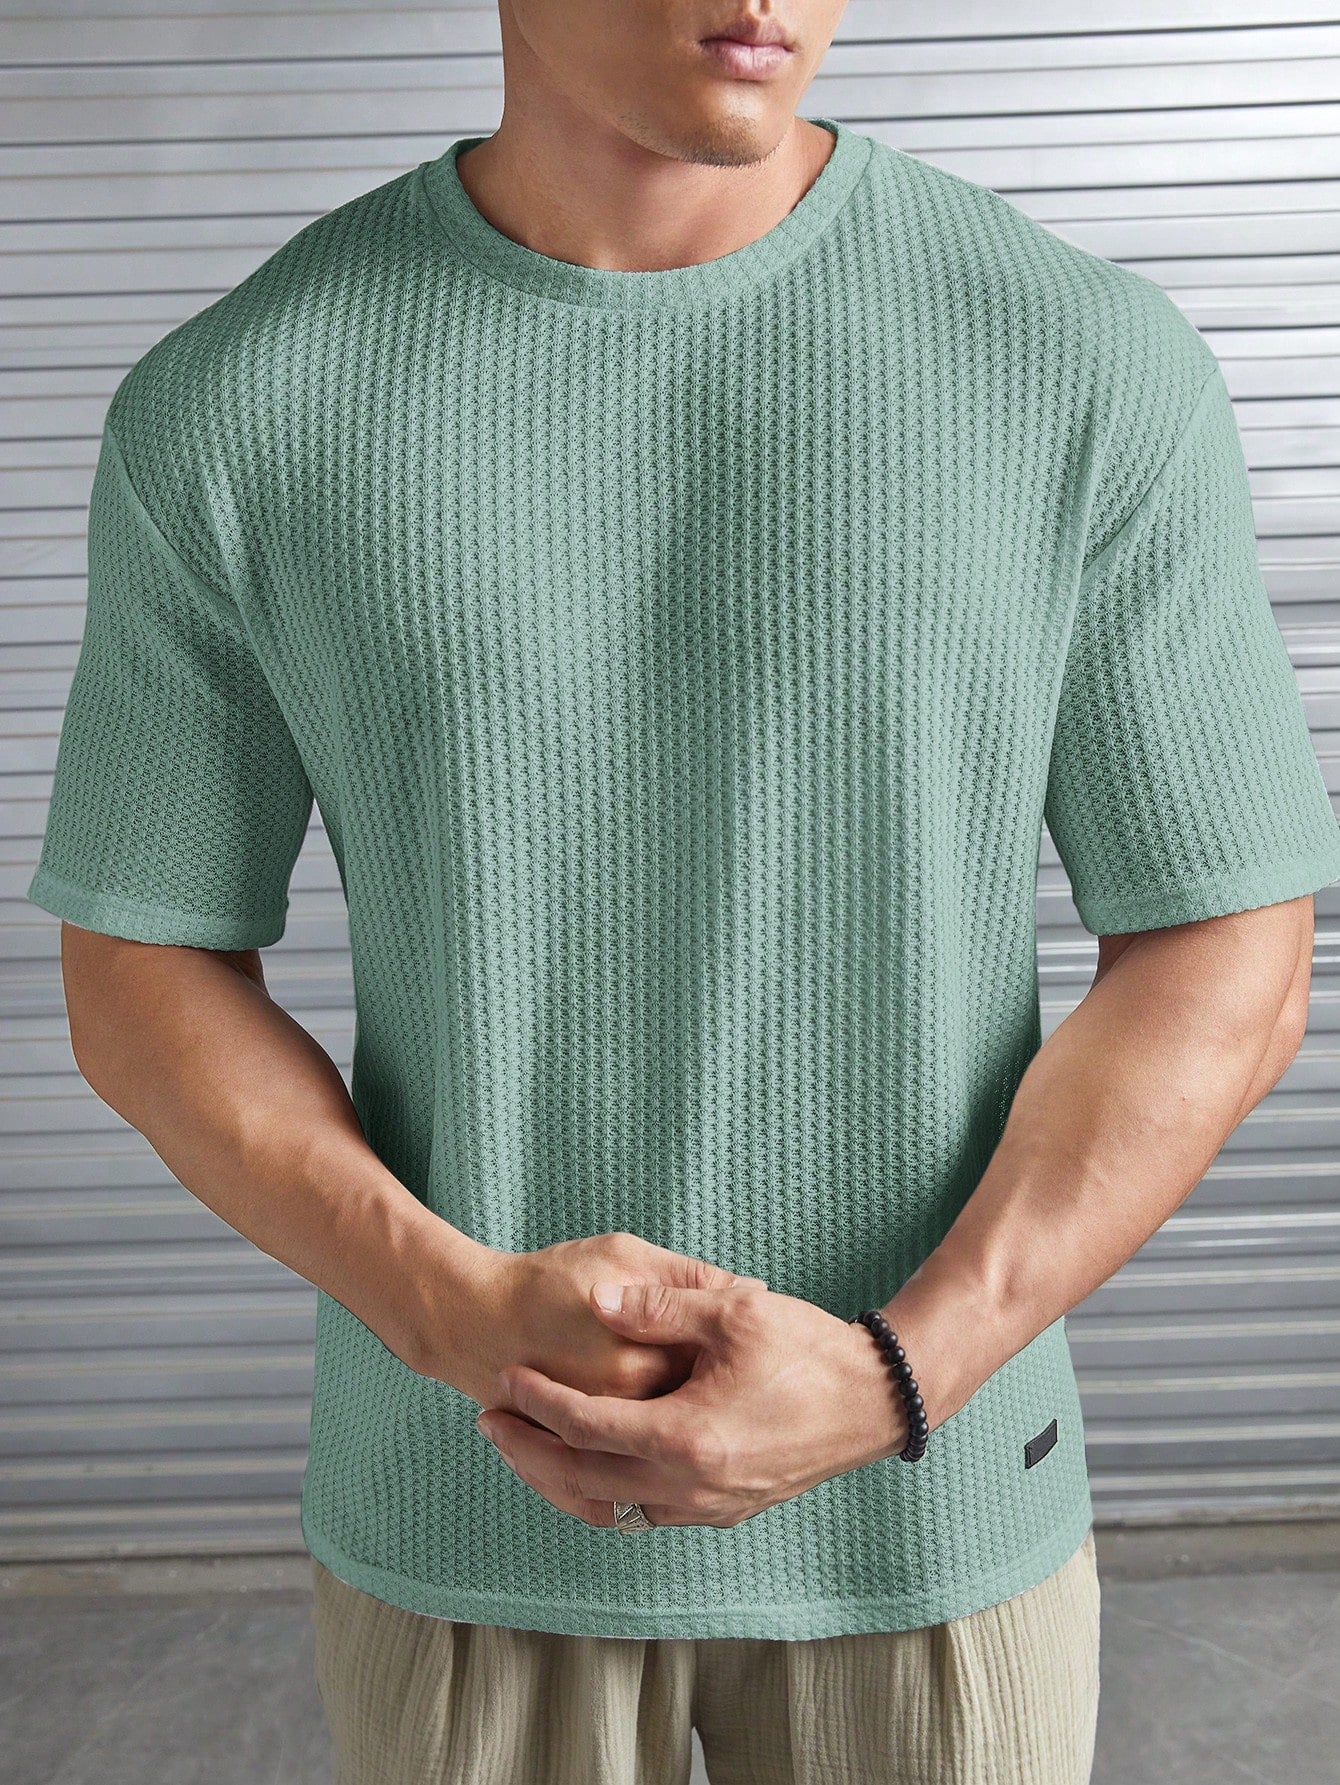 Nextthink Men's Solid Color Waffle-Knit Tee - NextthinkShopsm2303280205061553